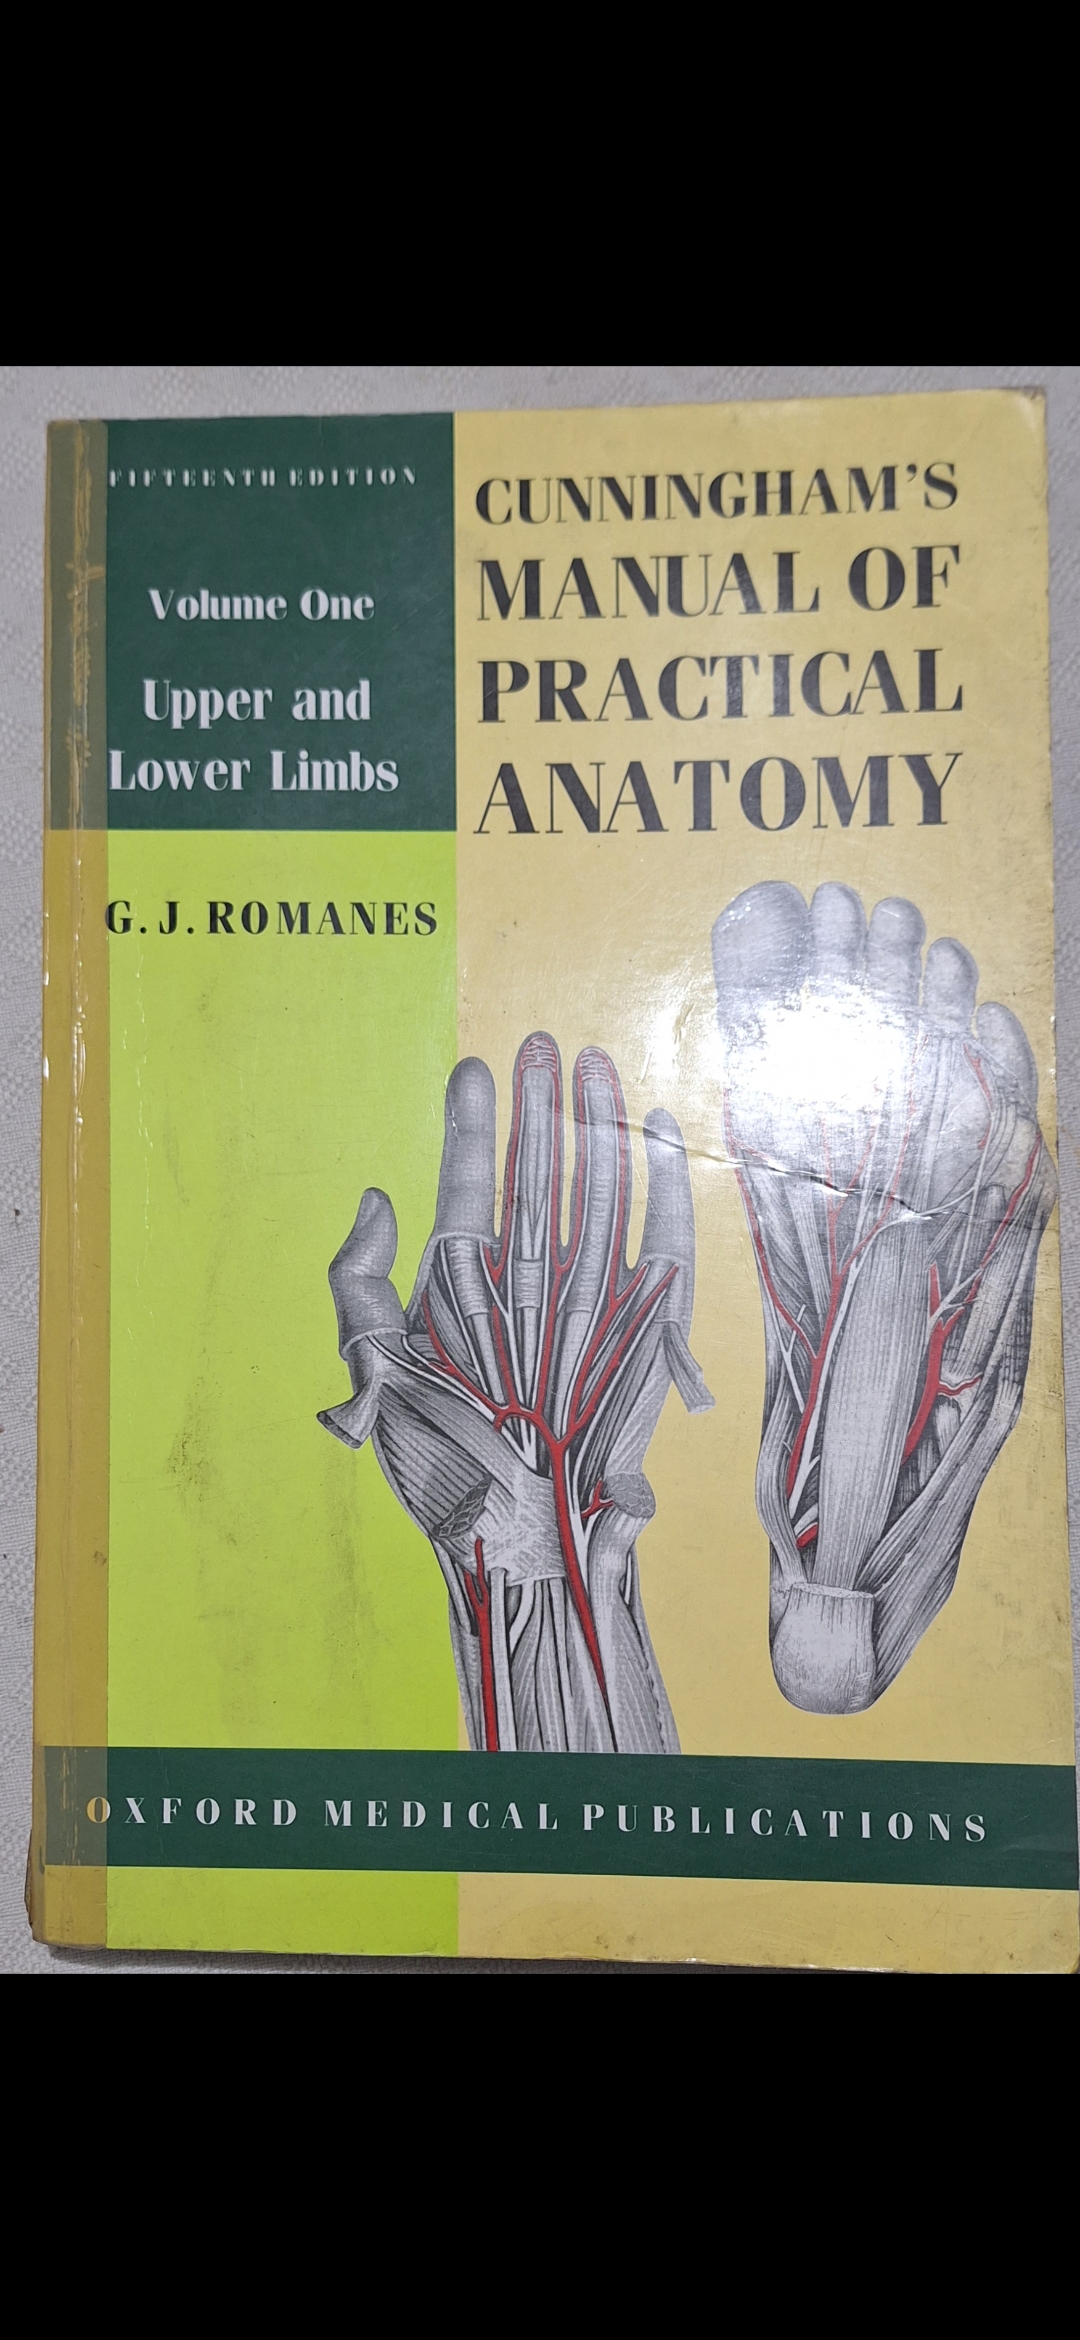 Cunningham’s Manual of Practical Anatomy VOL 1